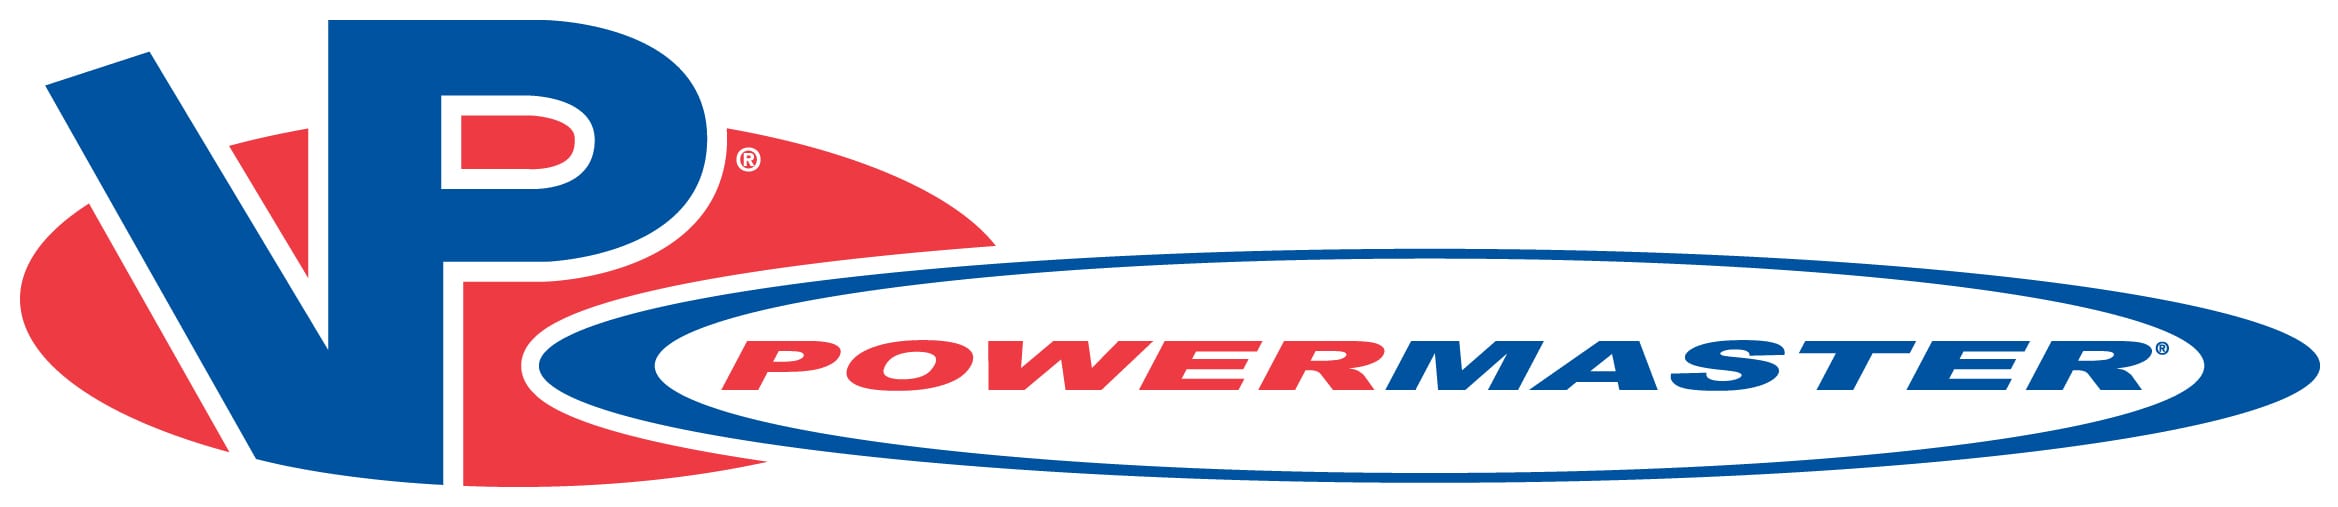 VP PowerMaster standard logo color